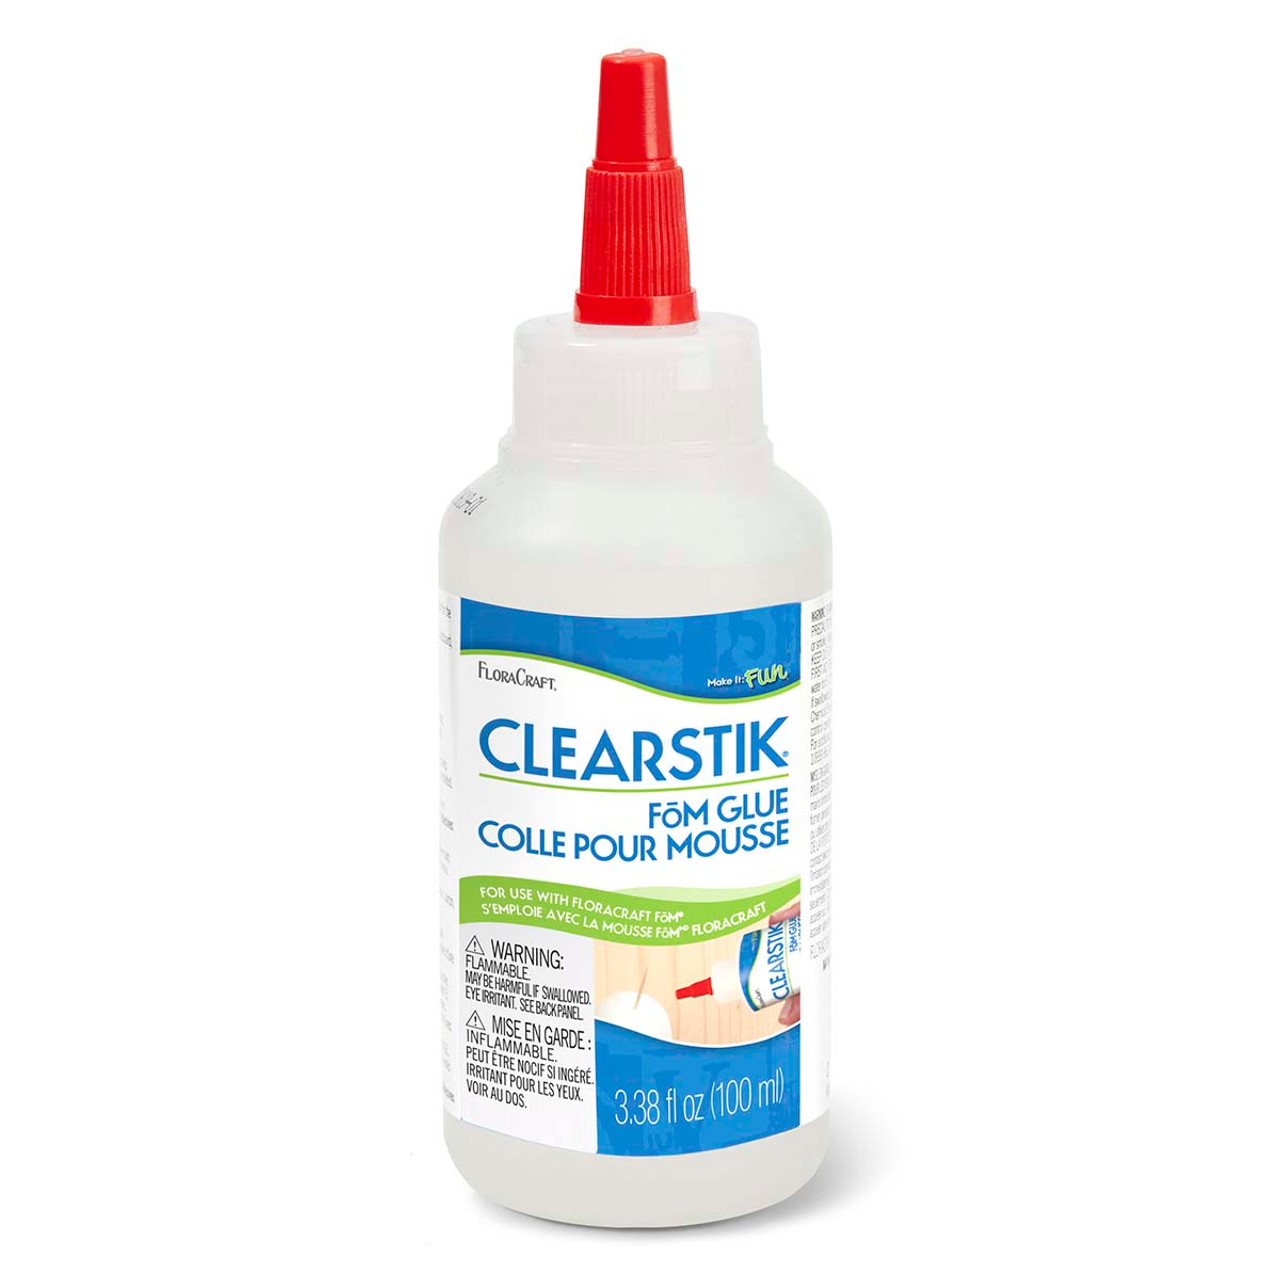 ClearStik FoM Glue Adhesive